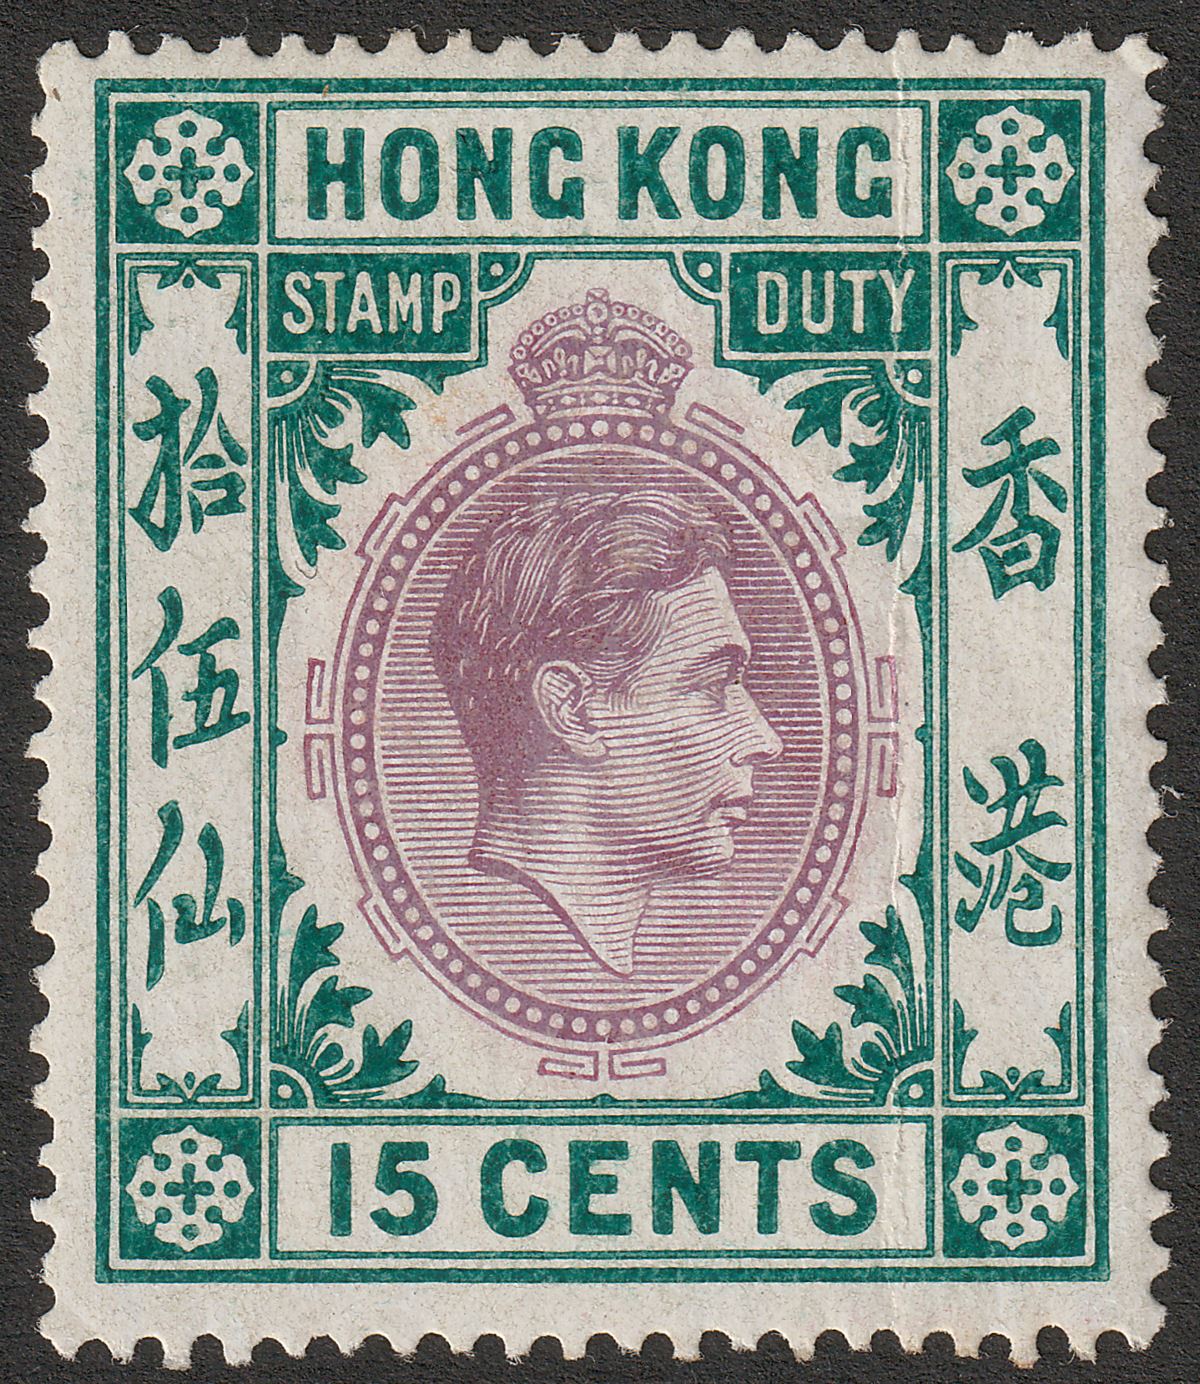 Hong Kong 1941 KGVI Revenue Stamp Duty 15c Mauve + Blue-Green Mint BF163 crease